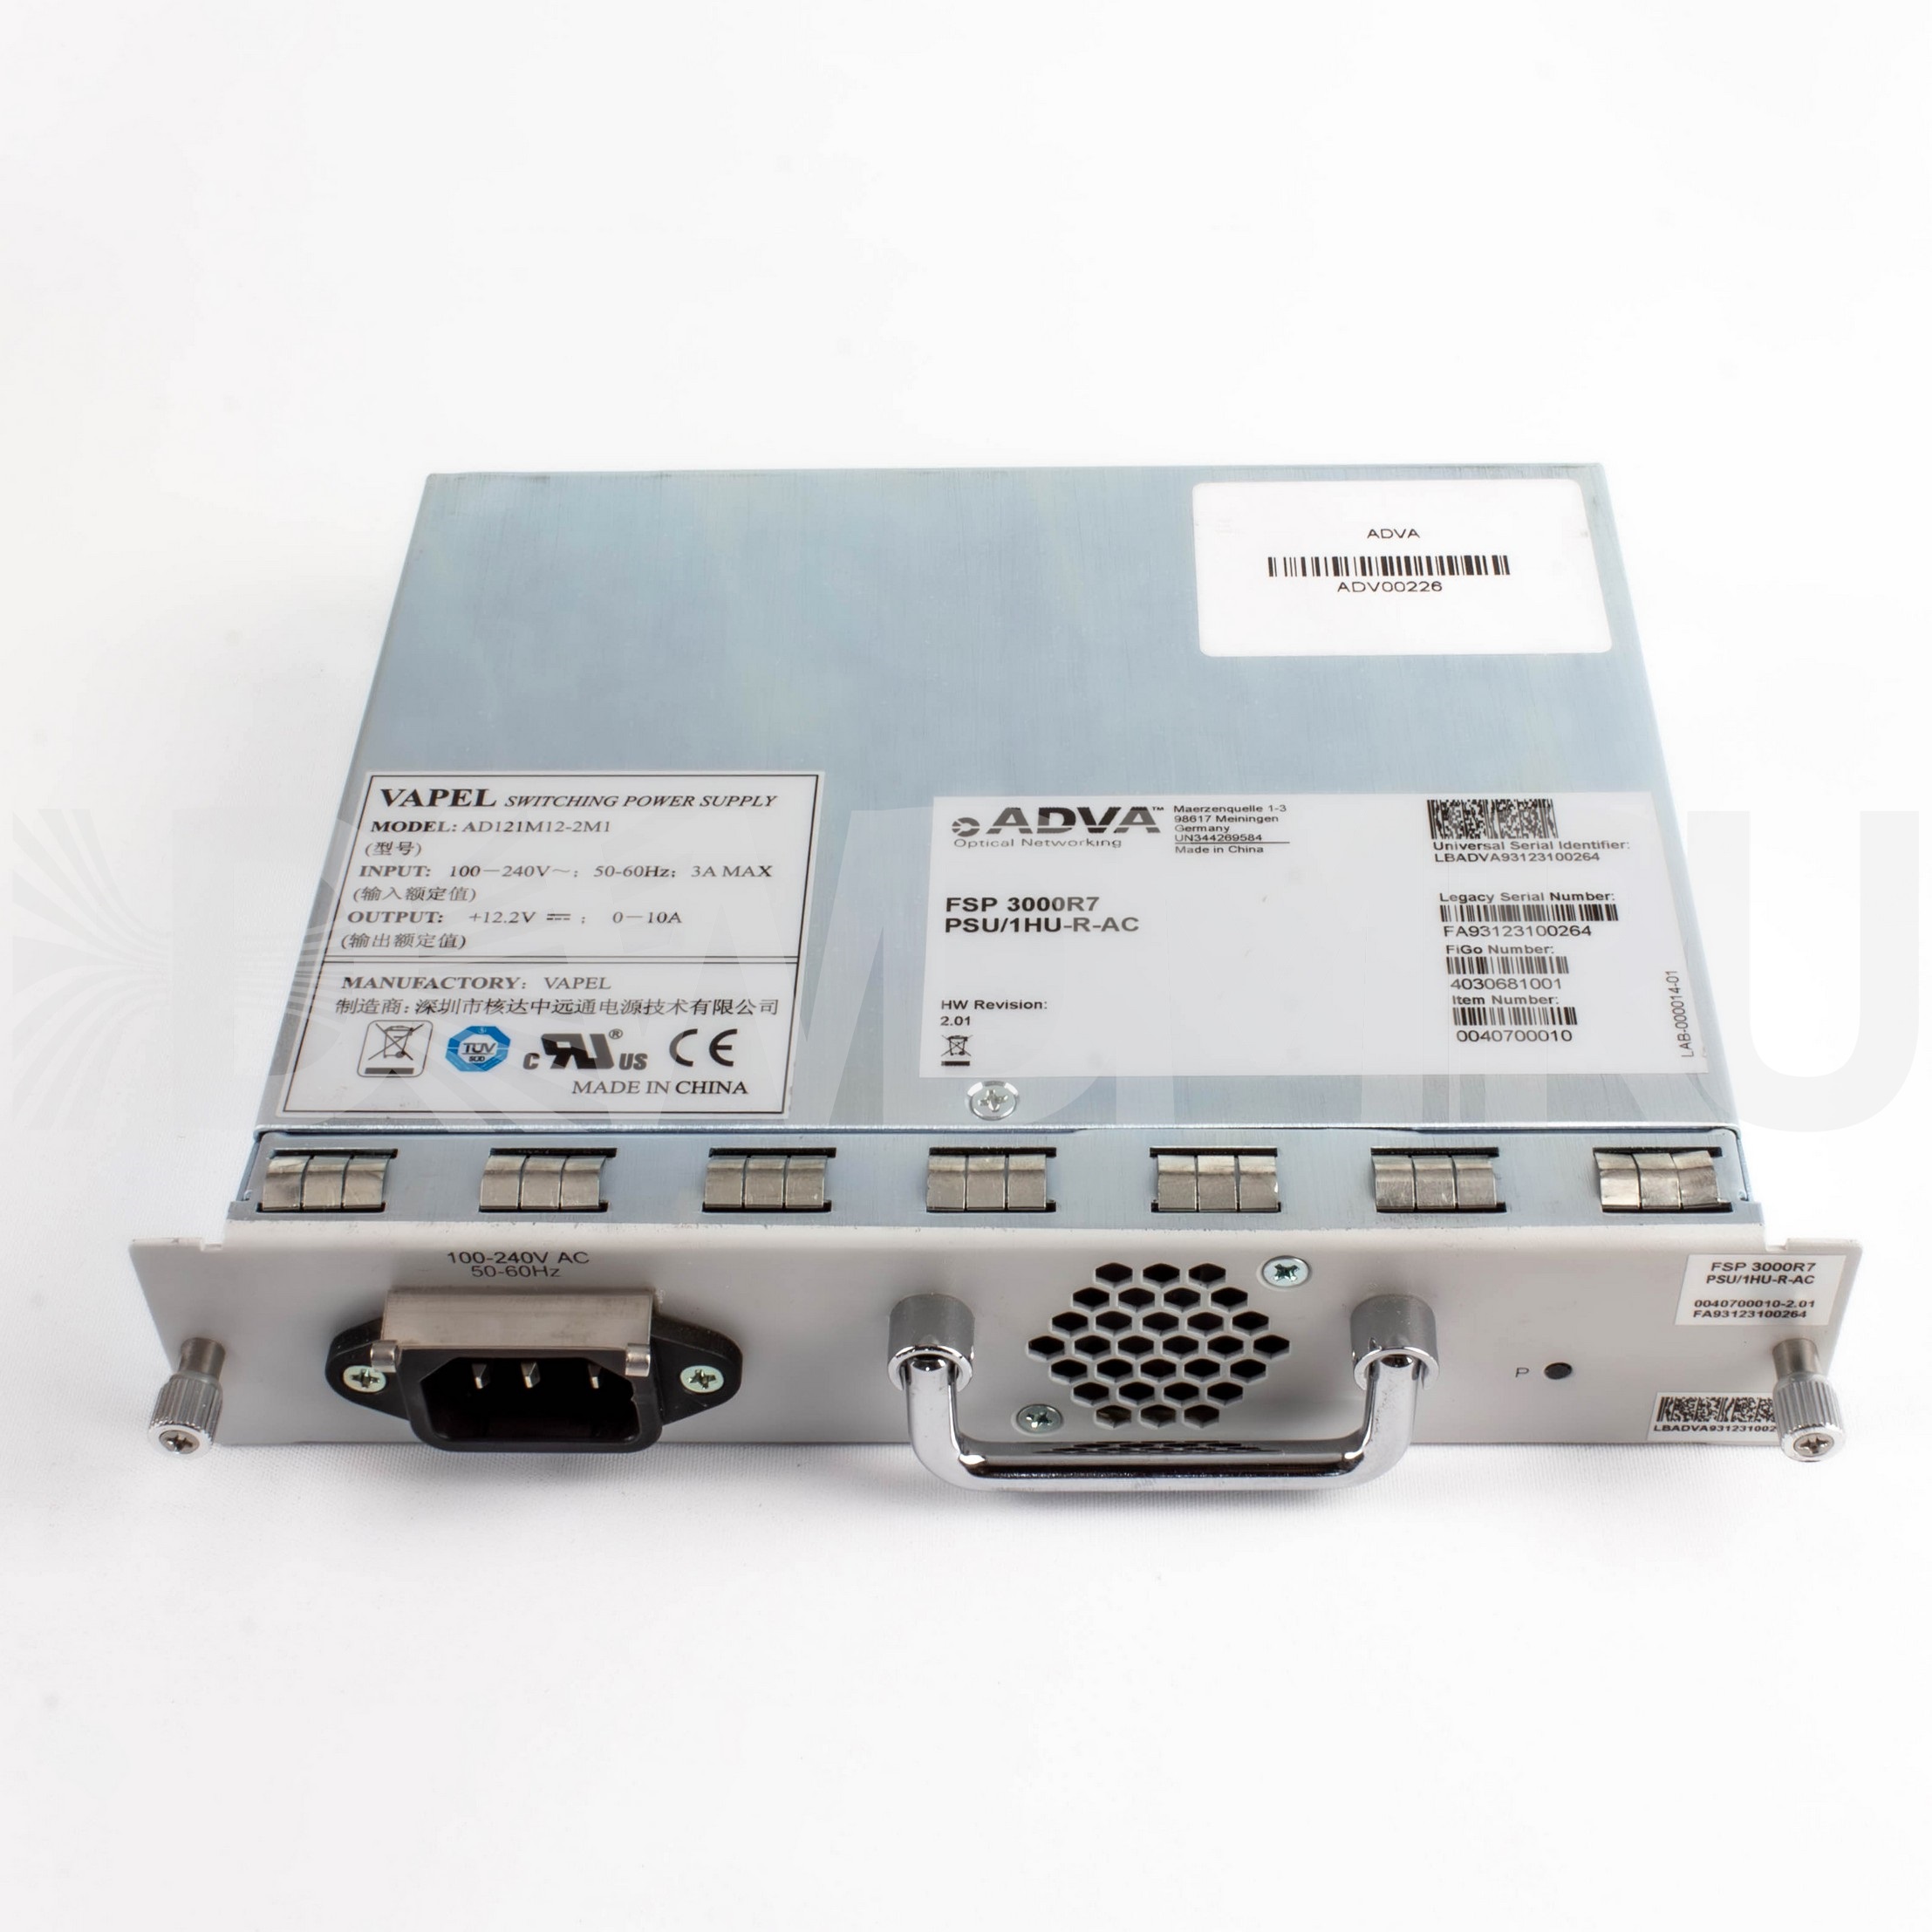 PSU/1HU-R-AC Power Supply Module (120W) AC for SH1HU-R ADVA Optical pn0040700010